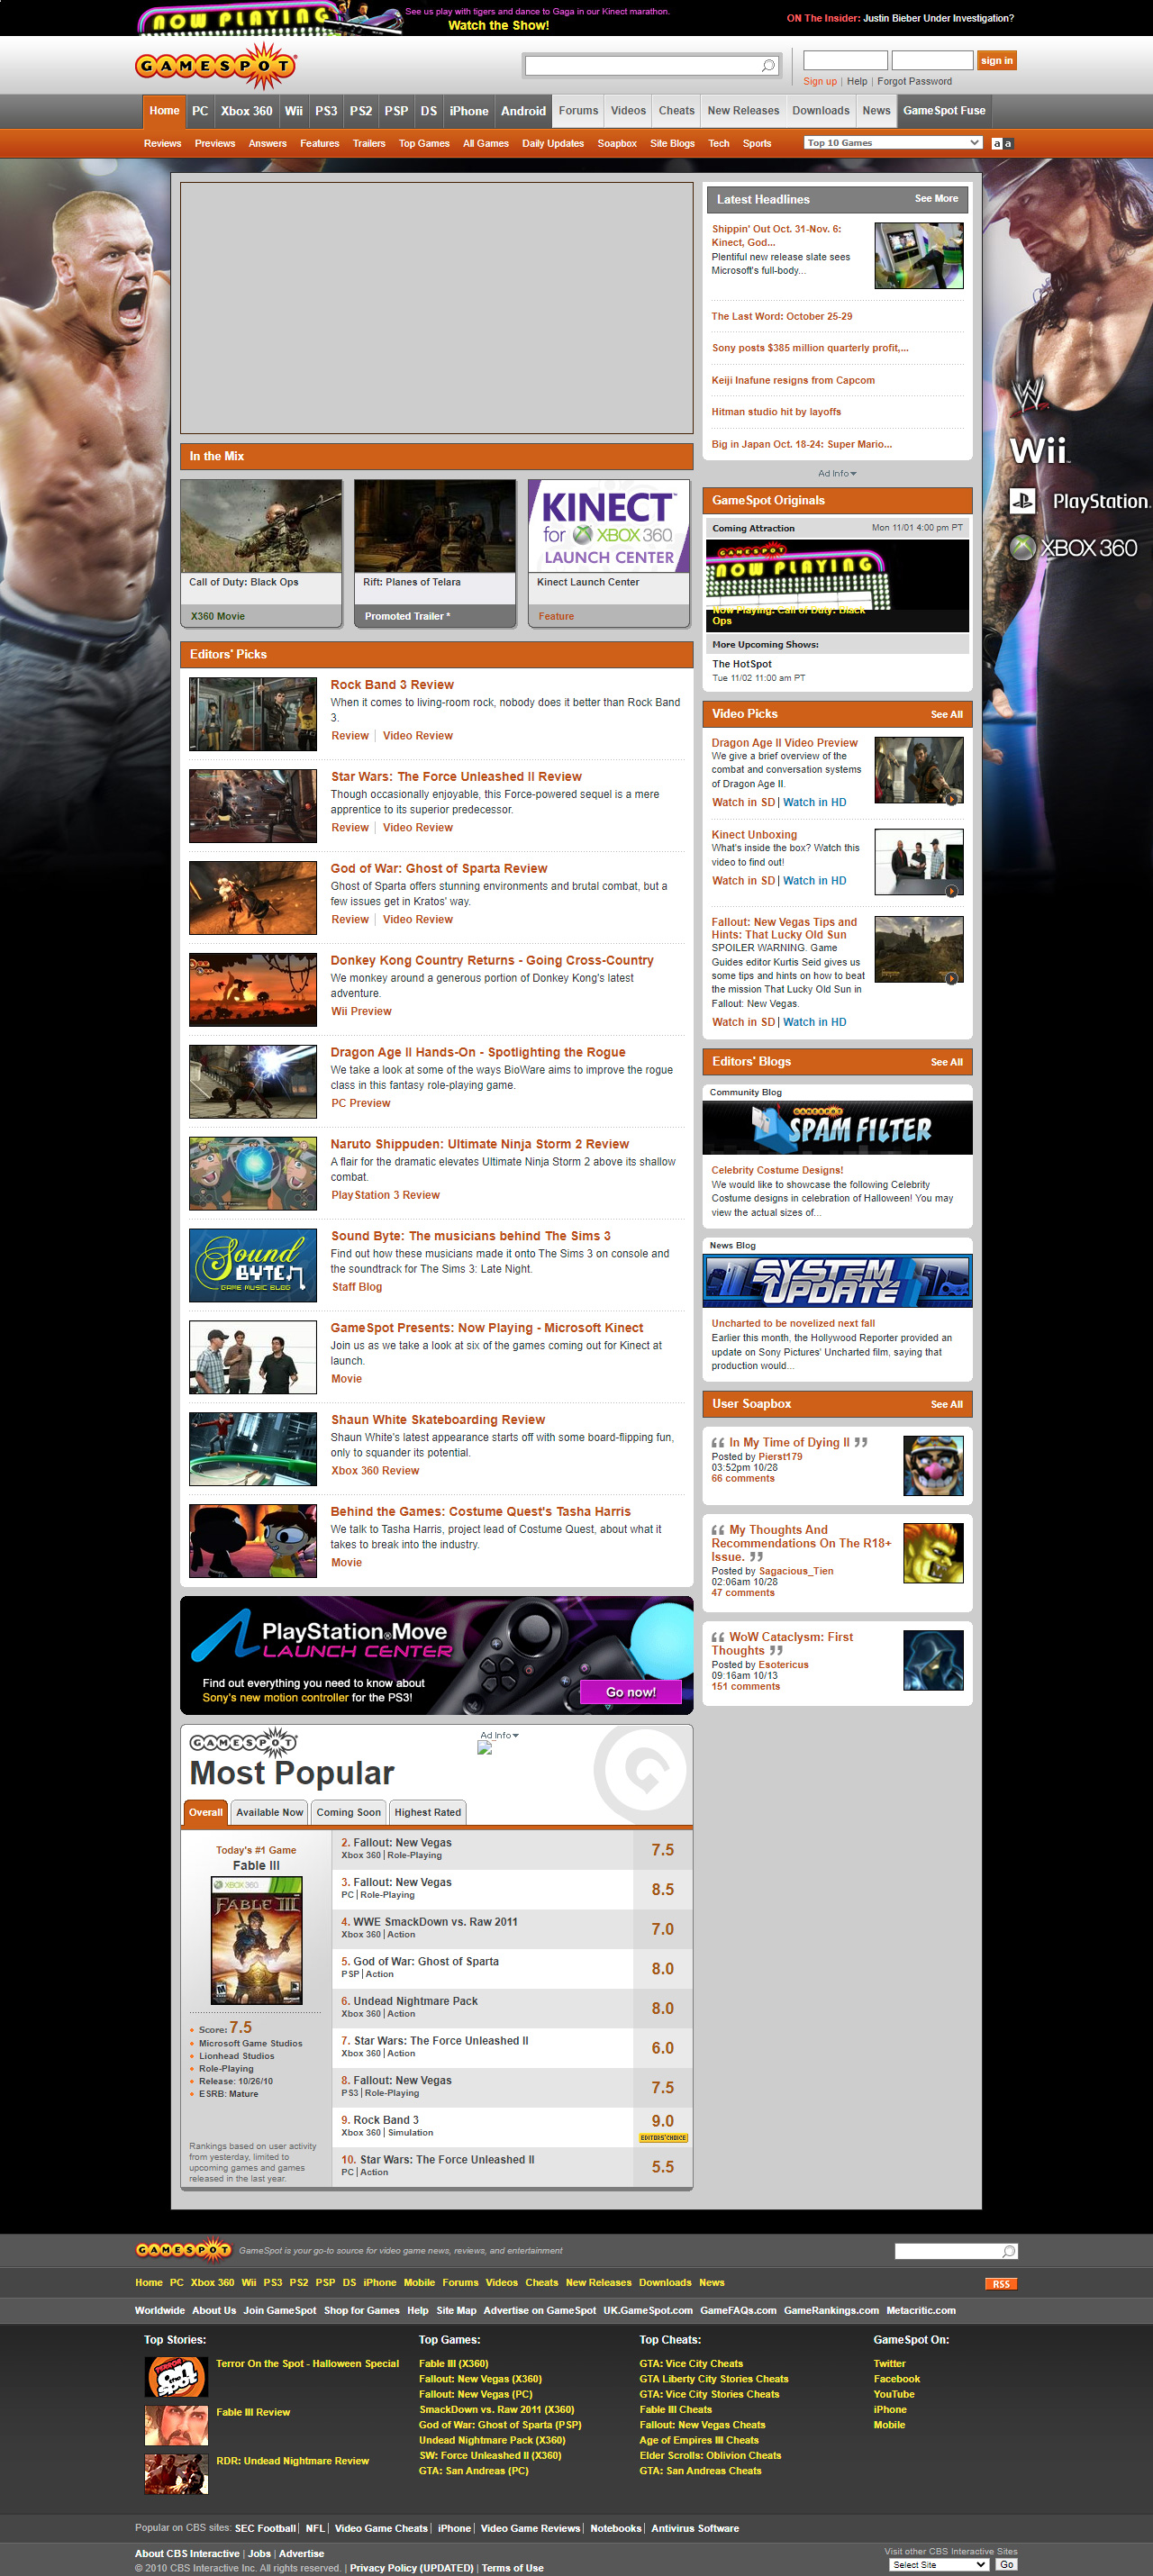 GameSpot in 2010